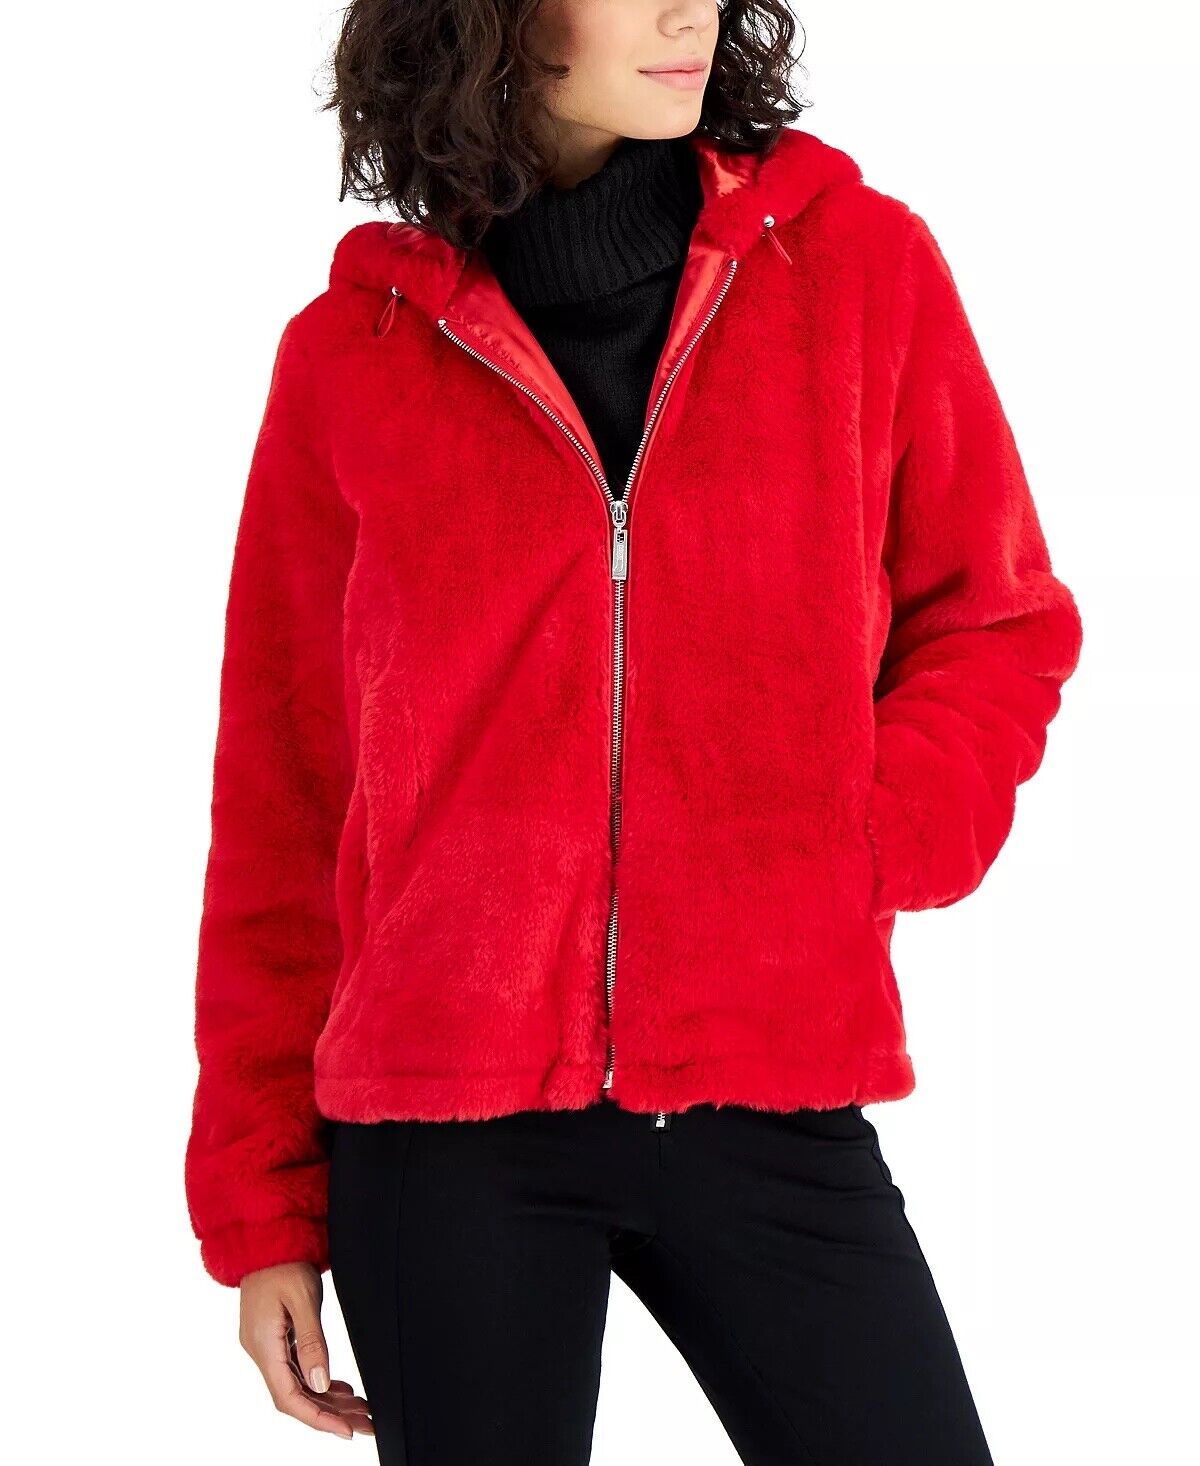 JOU JOU Juniors' Girls Hooded Faux-Fur Coat Red XS